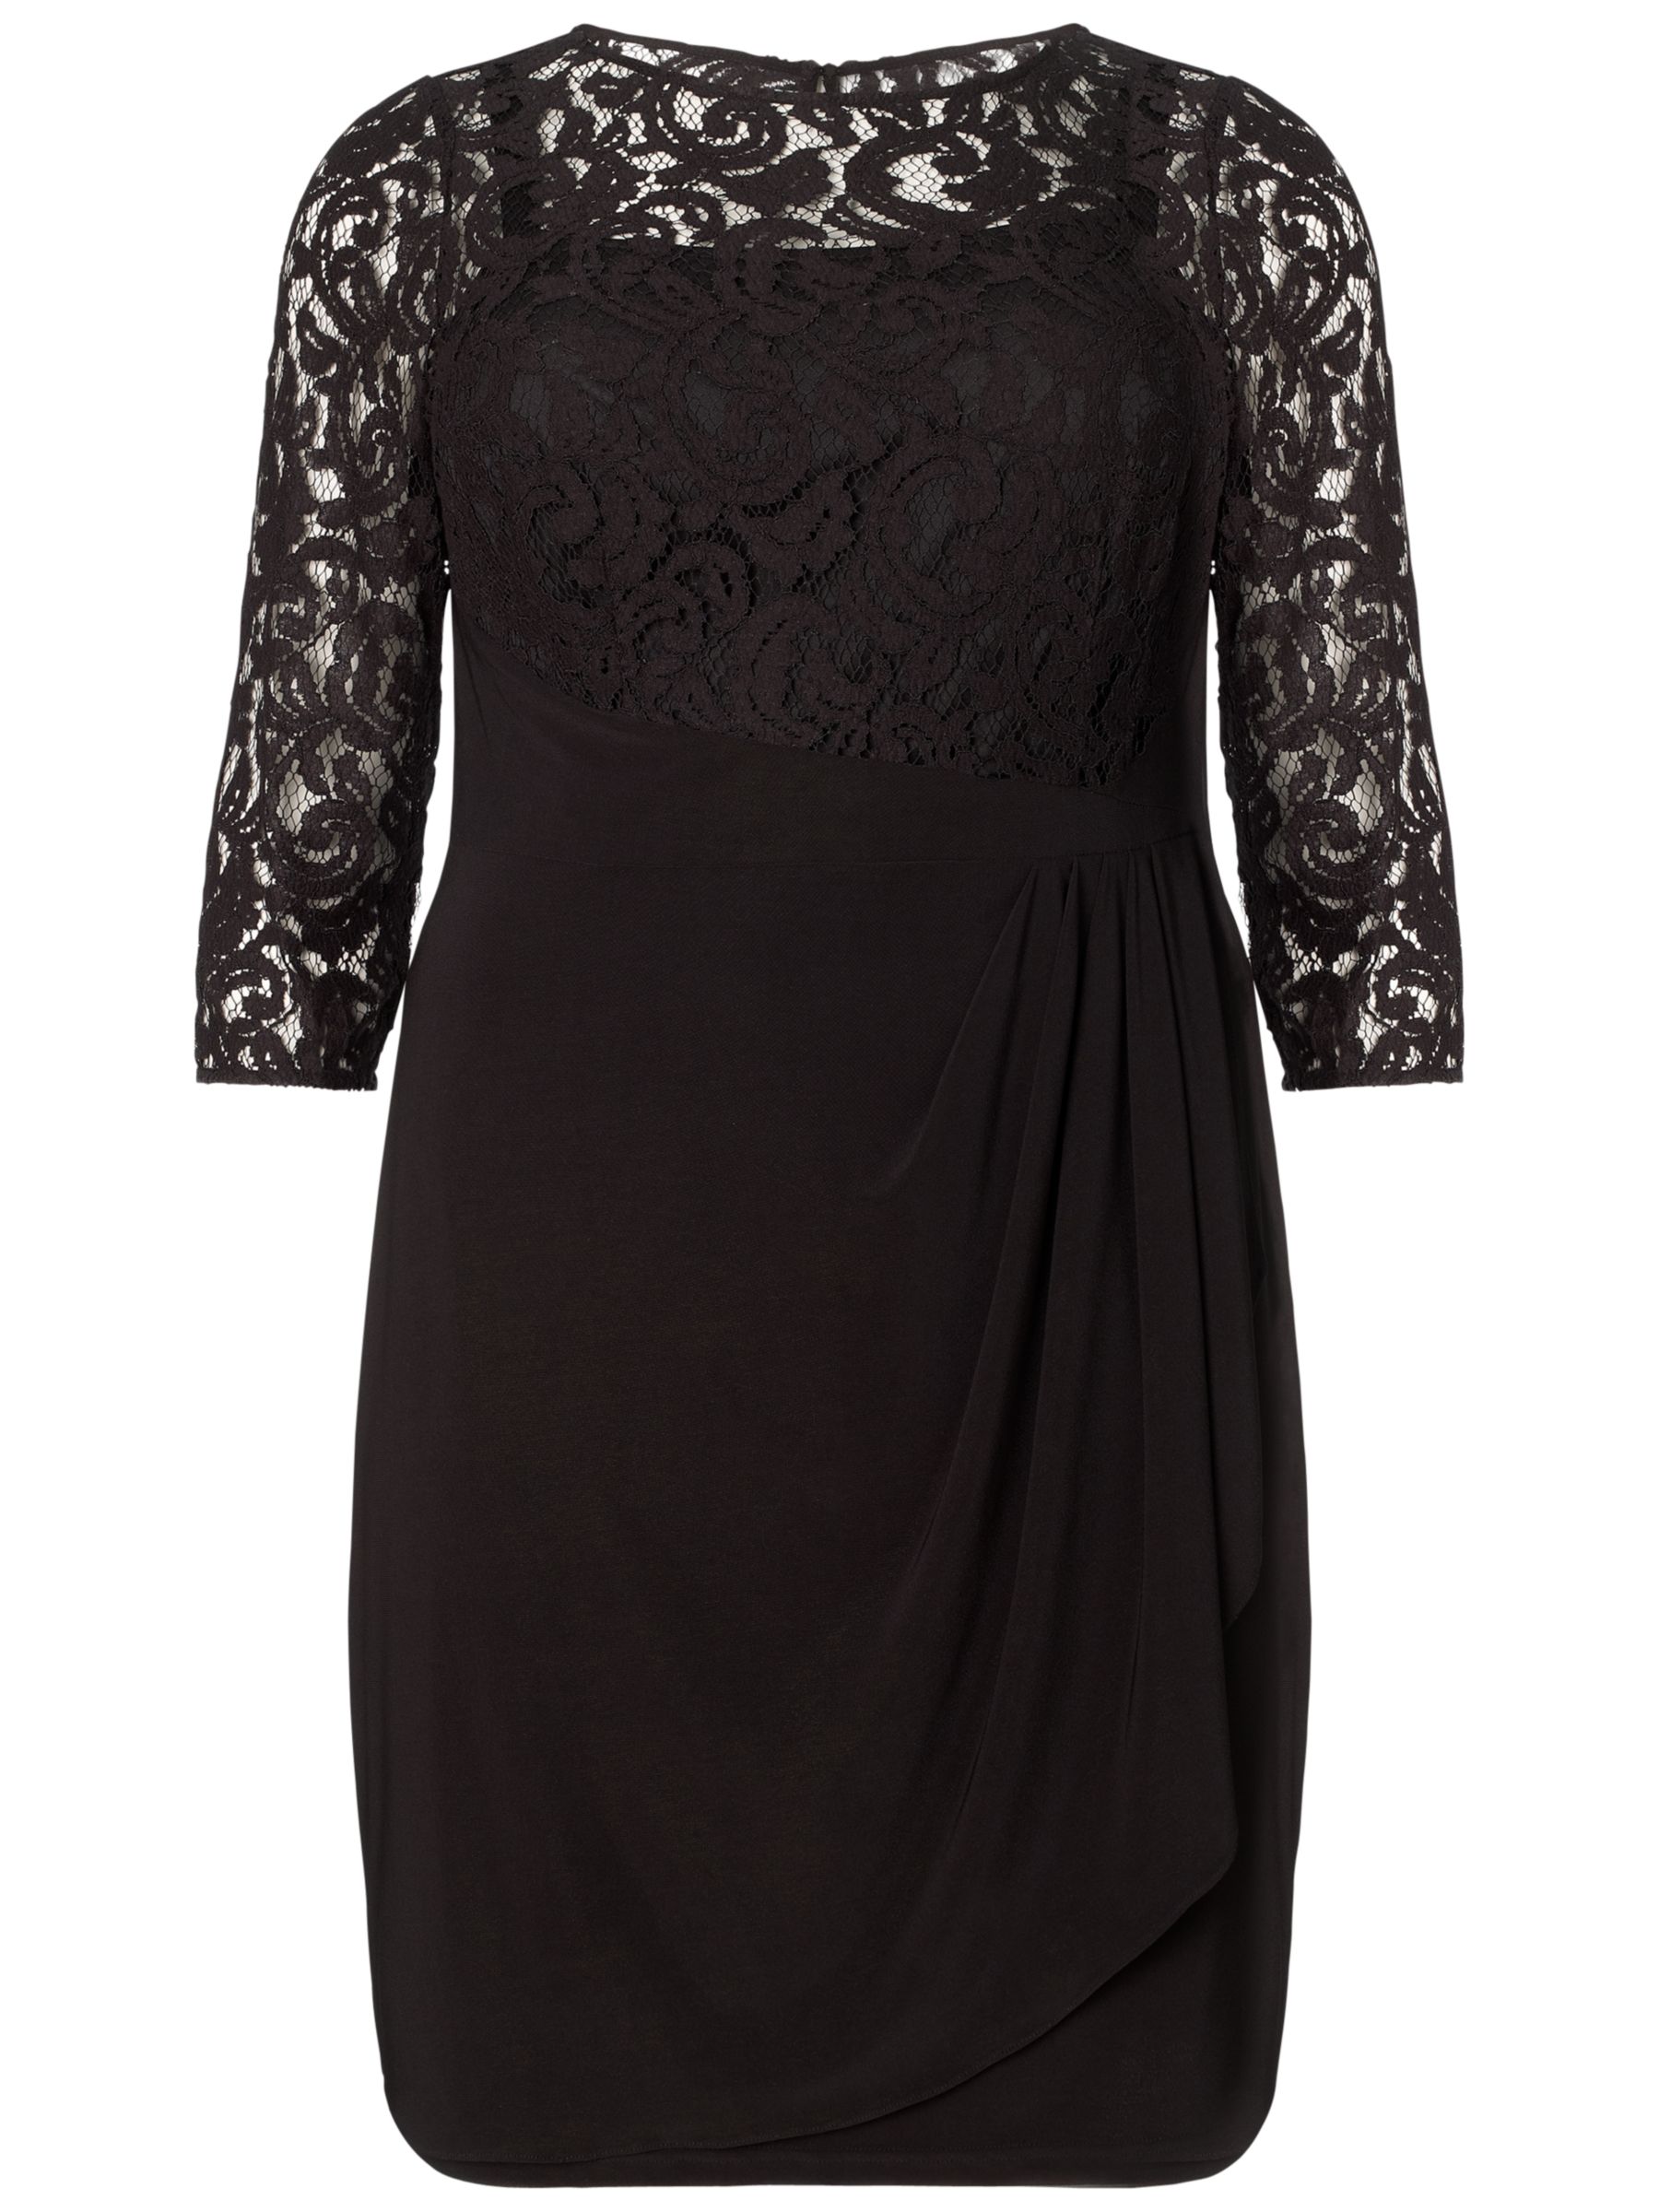 Adrianna Papell Plus Size Rose Flounce Dress, Black